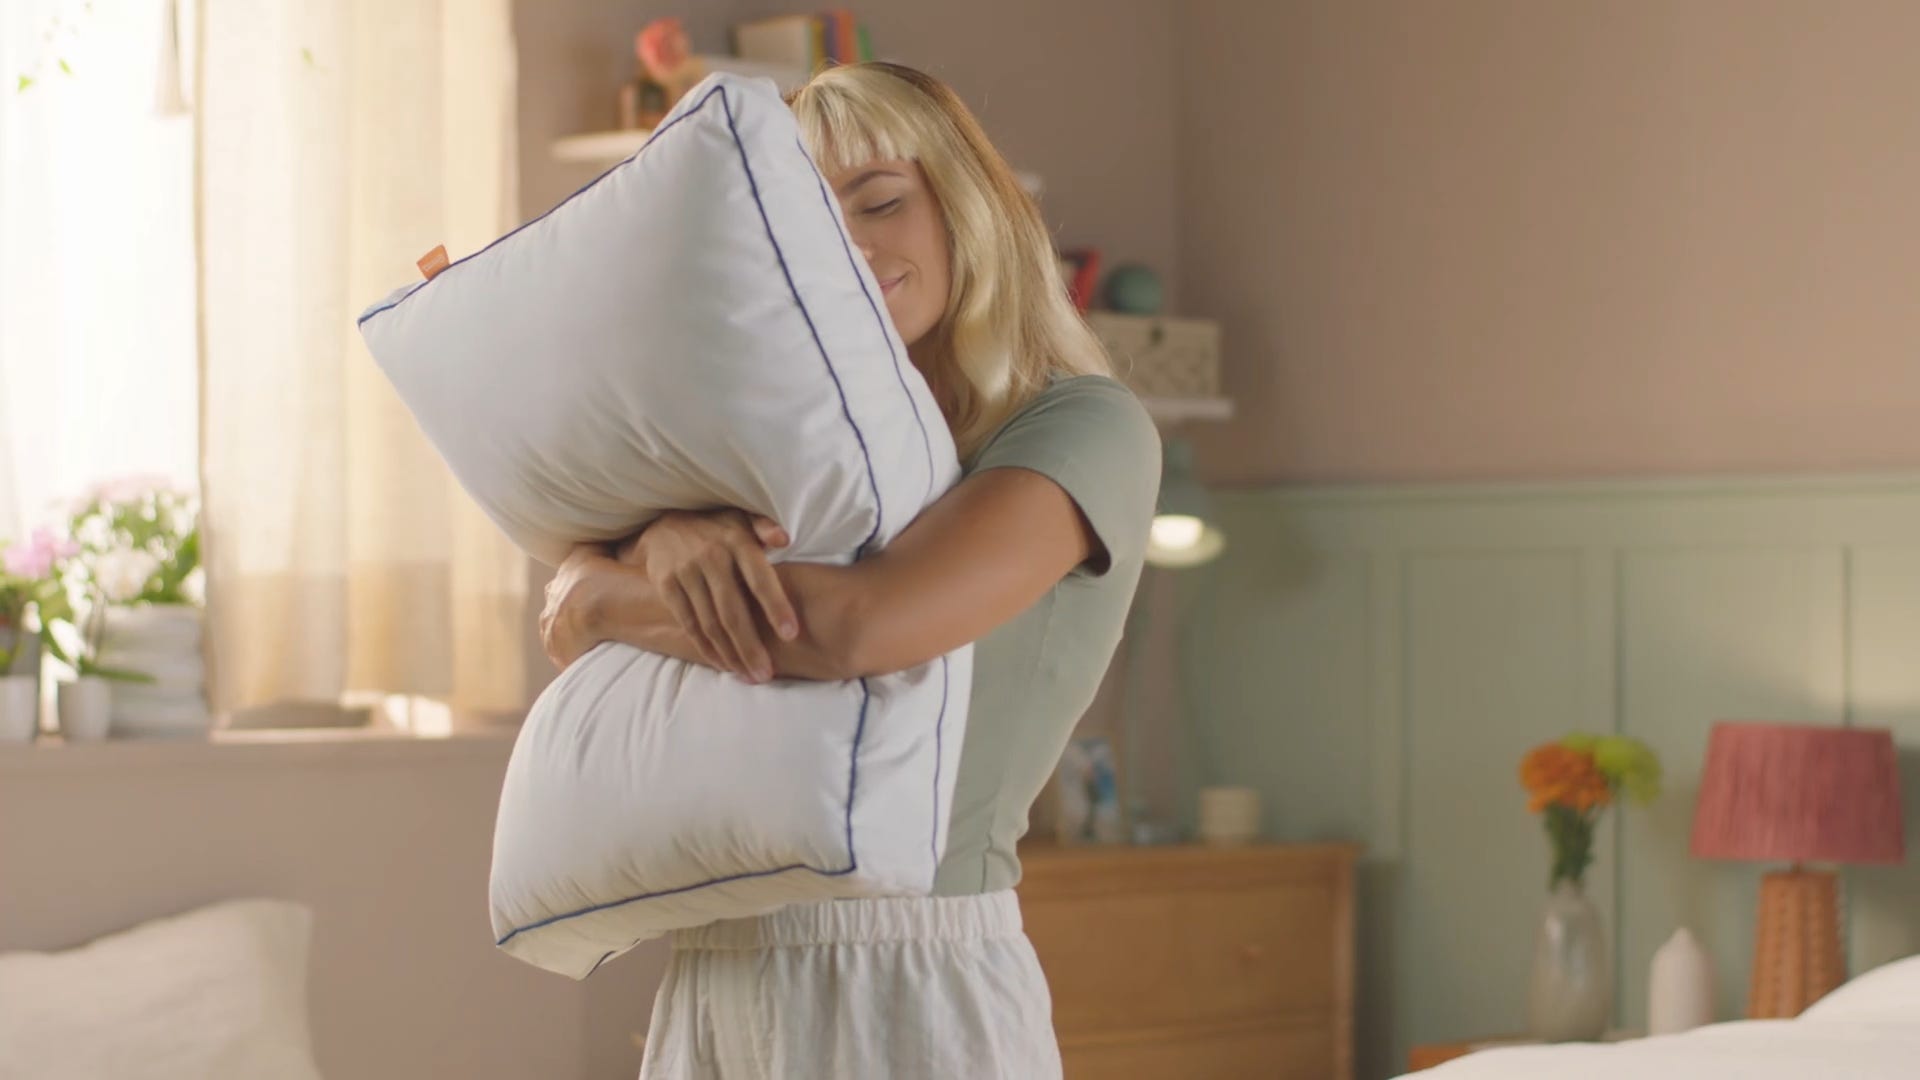 Emma Microfibre Pillows - Soft but never flat